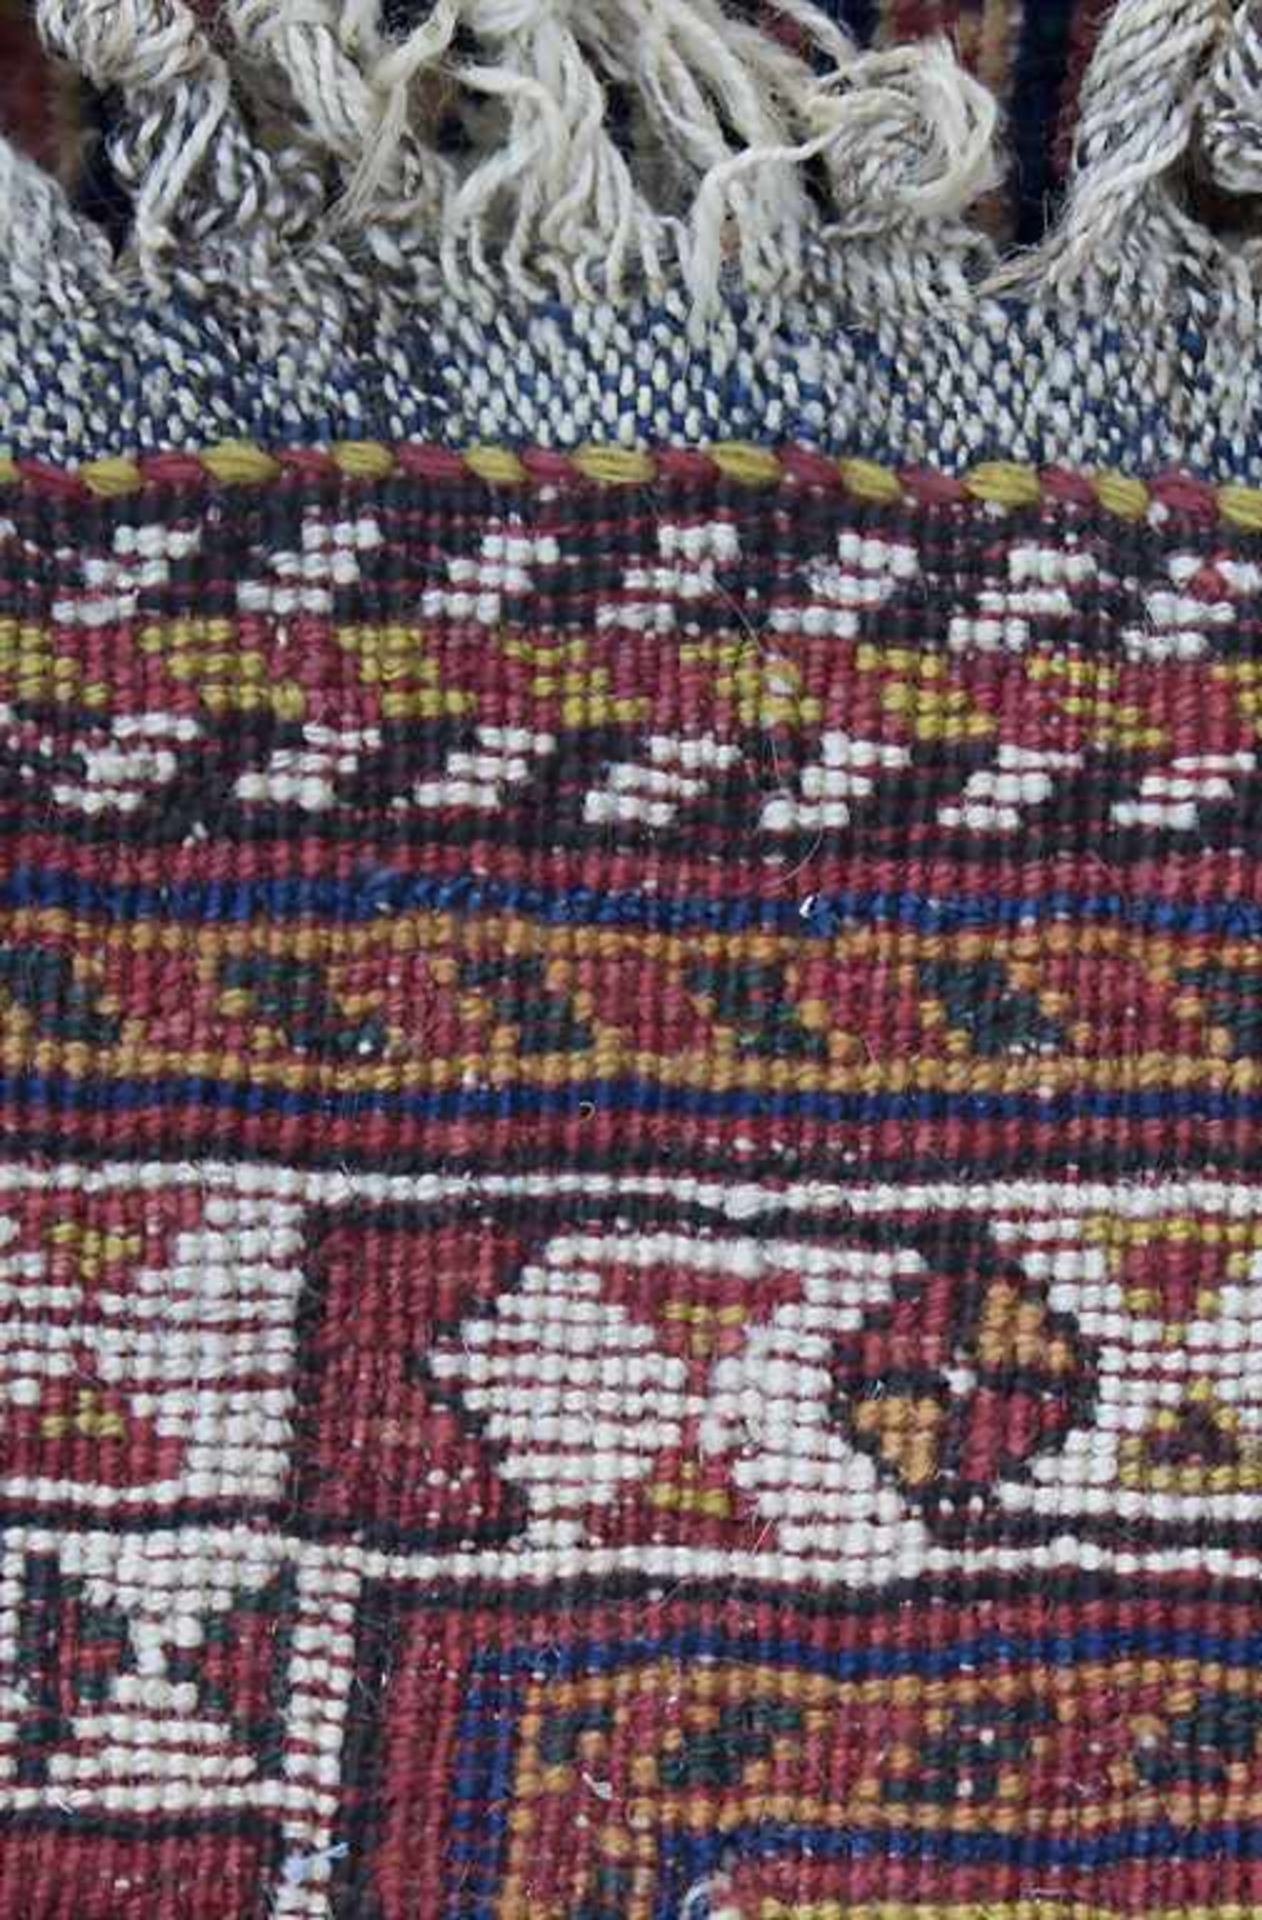 Orientteppich / An oriental carpetMaterial: Wolle auf Wolle, Maße: 238 x 145 cm, Zustand: gut, - Image 5 of 5